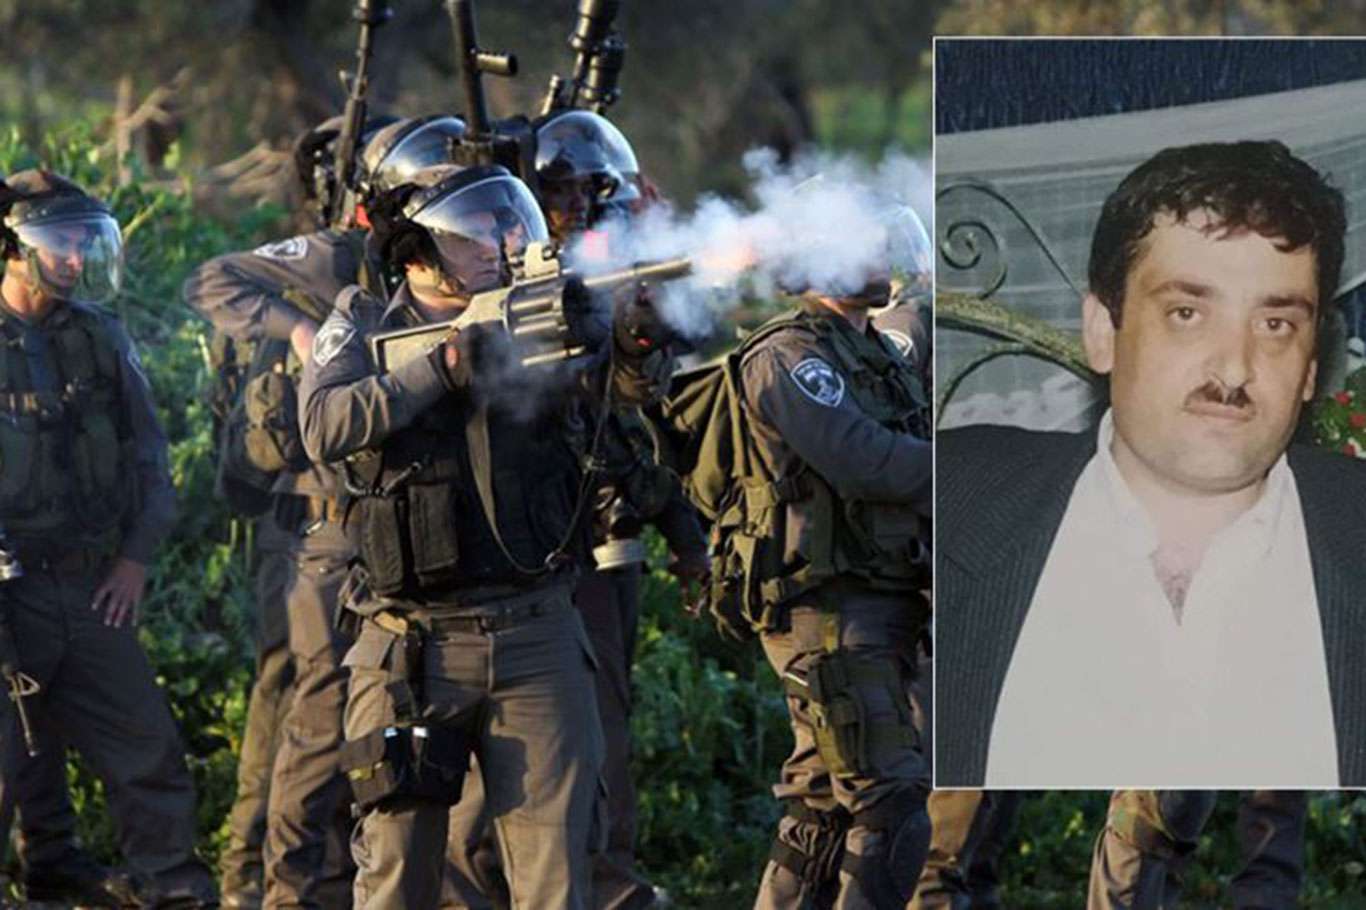 Palestinian dies of tear gas inhalation in Qalandia camp